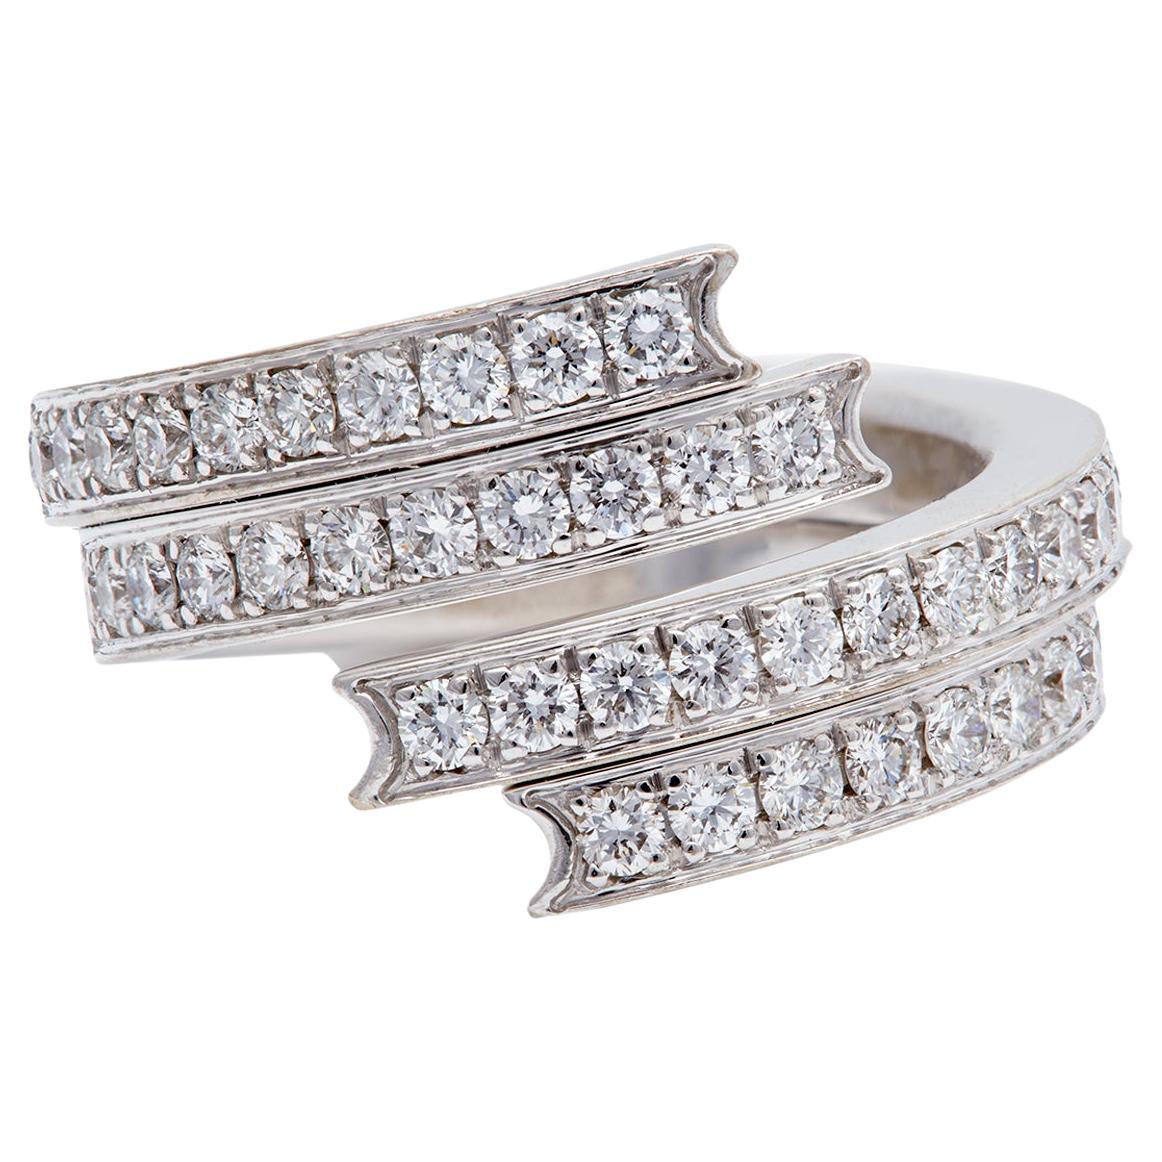 Chaumet Diamond 18k White Gold Ribbon Wrap Ring